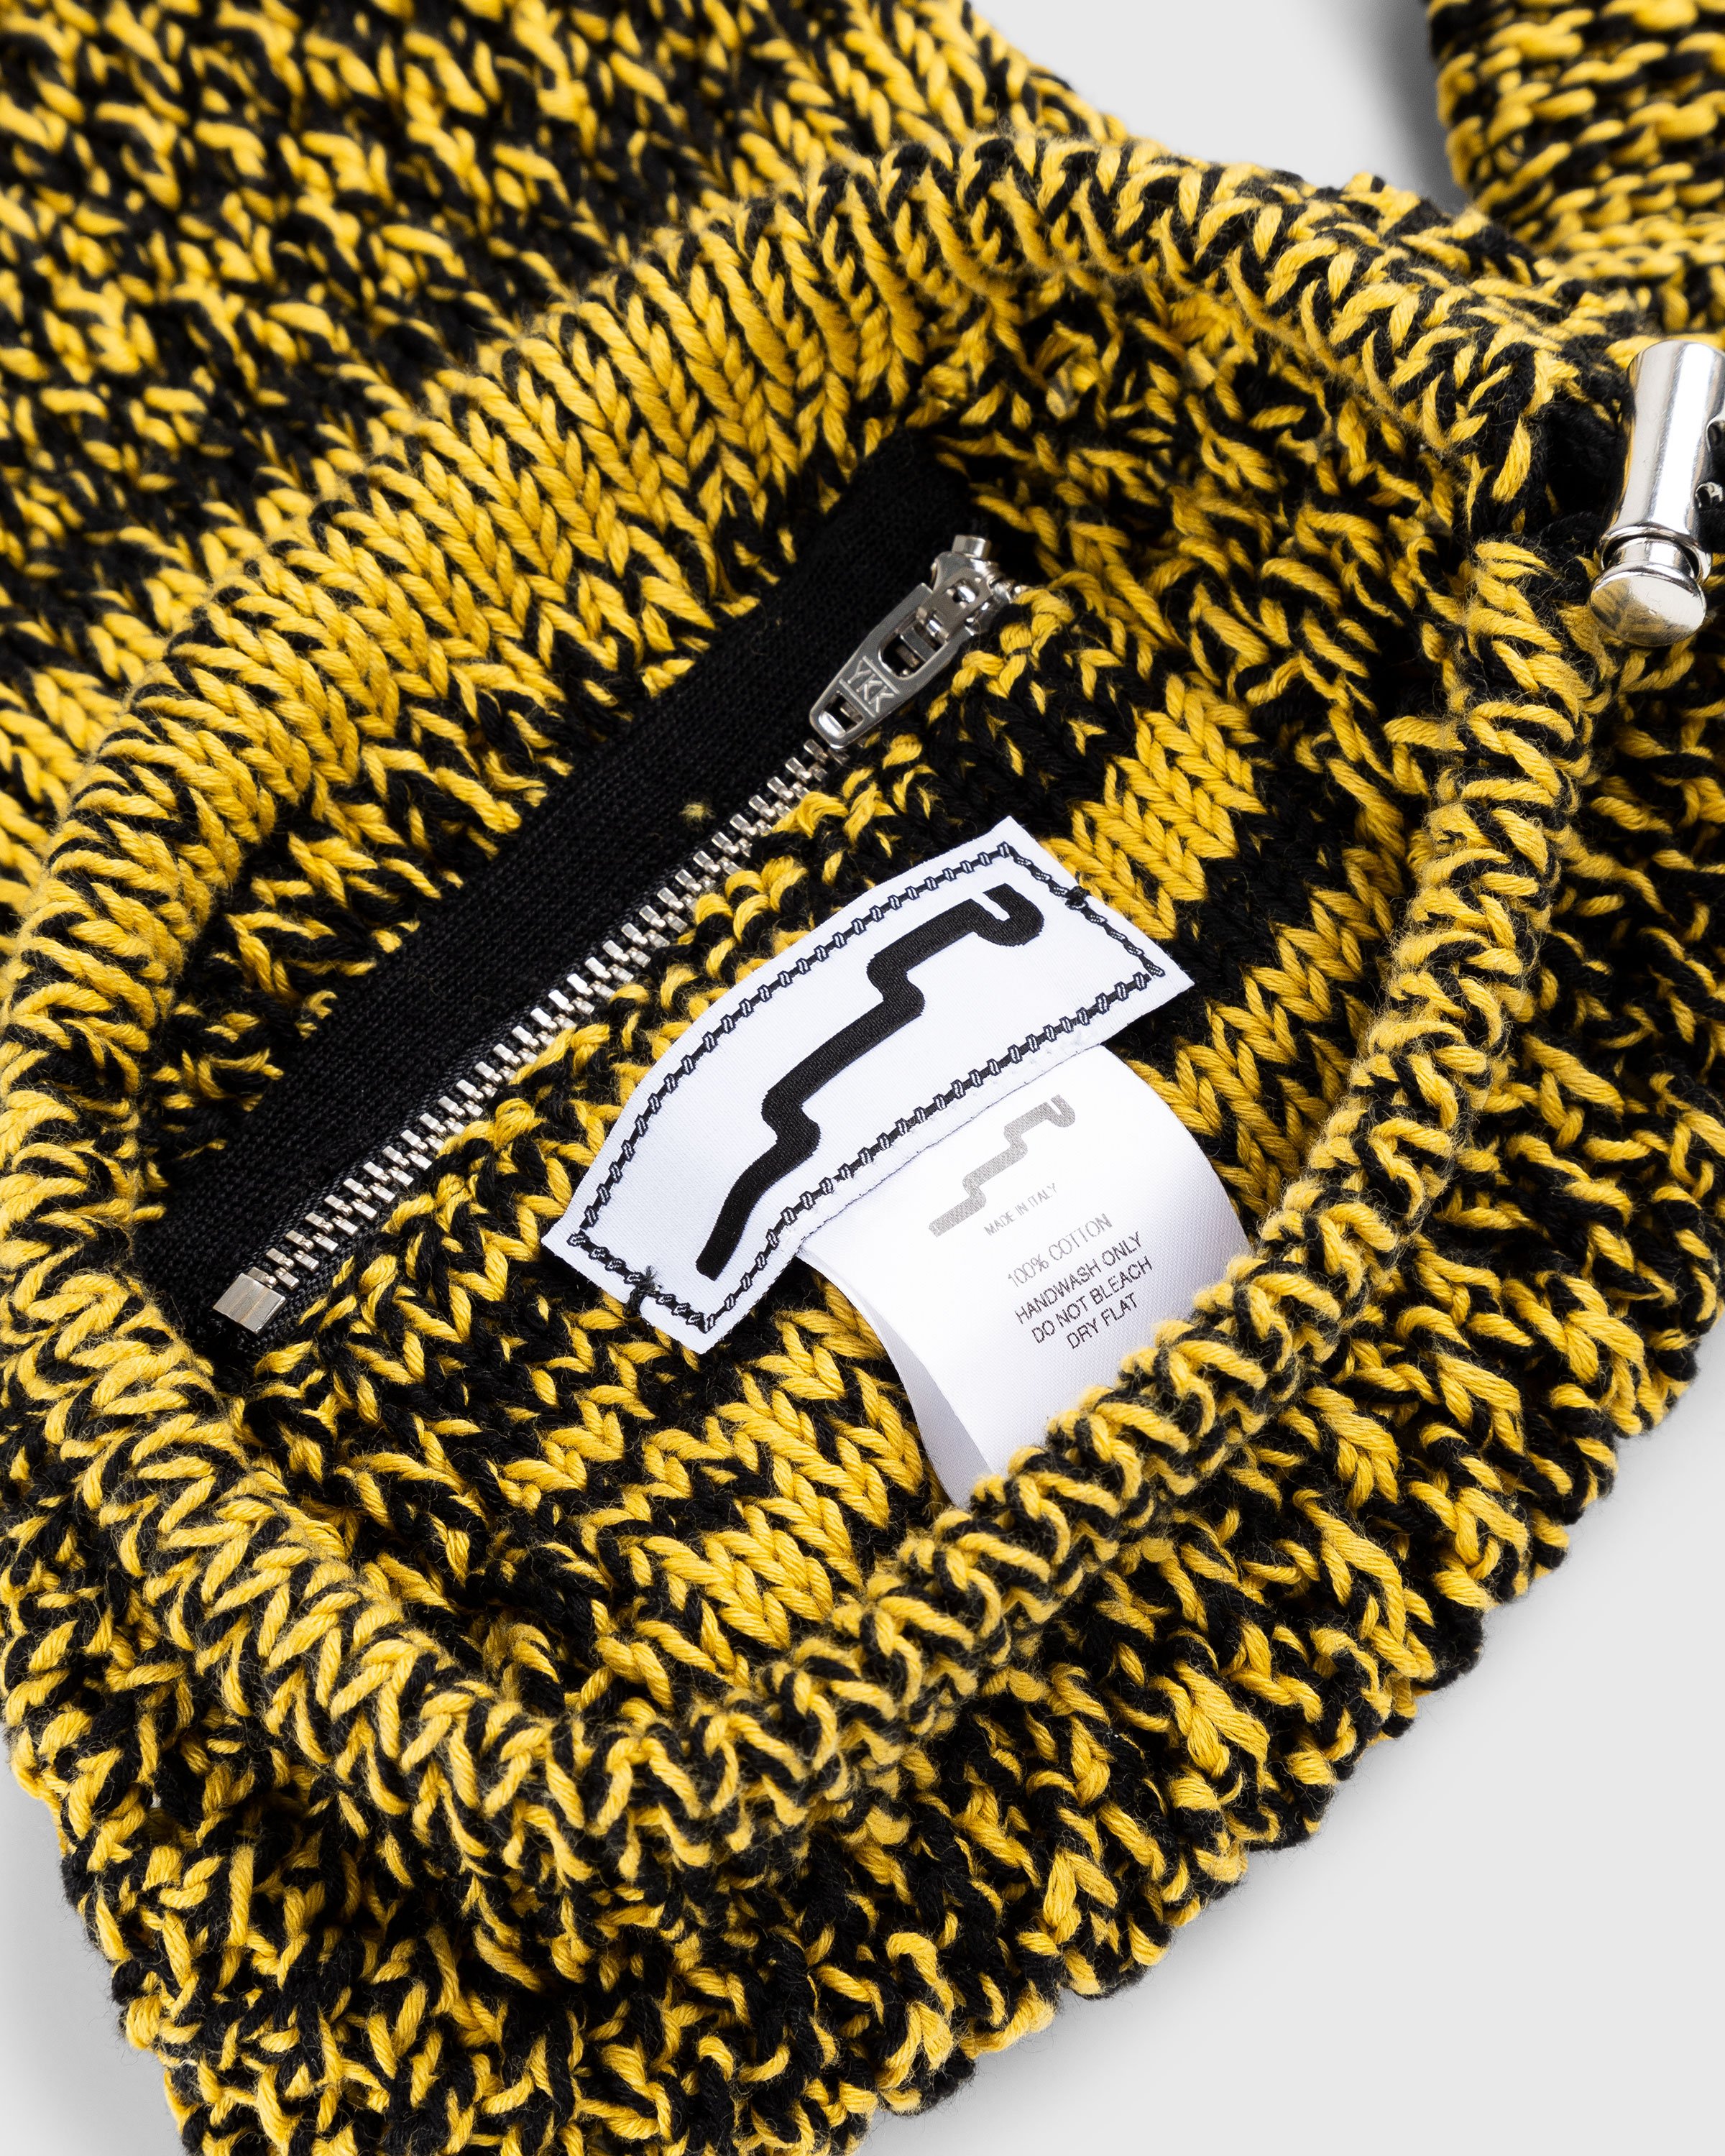 SSU - Mesh Stitch Knitted Bag Black/Yellow - Accessories - Black - Image 4